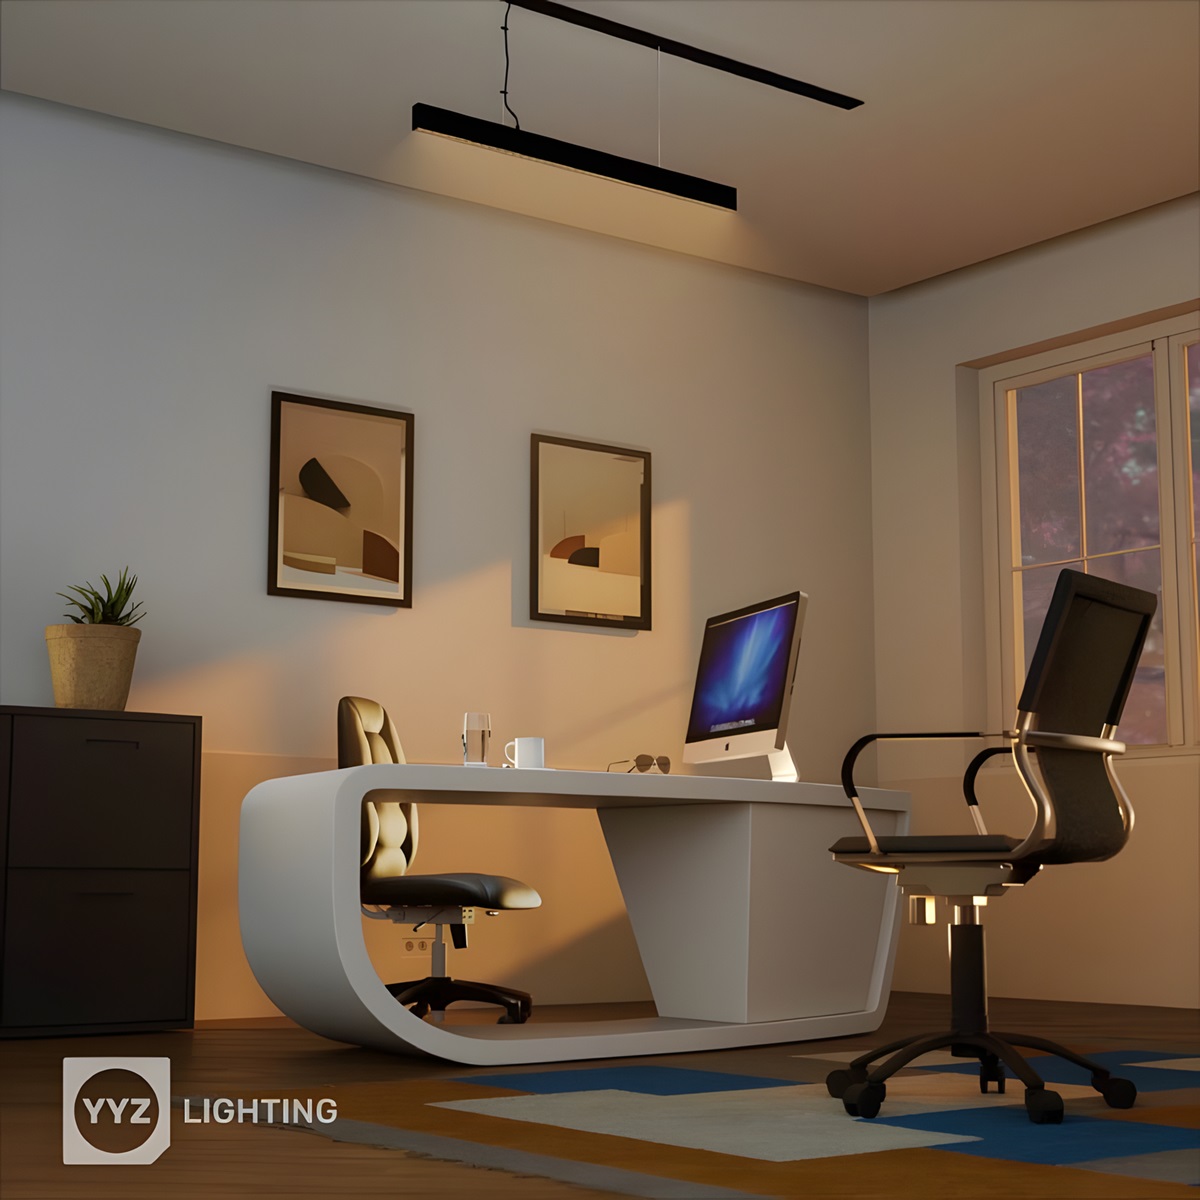 YYZ Lighting Introduces the LFT60-LC Multi-spot Linear Pendant Lights